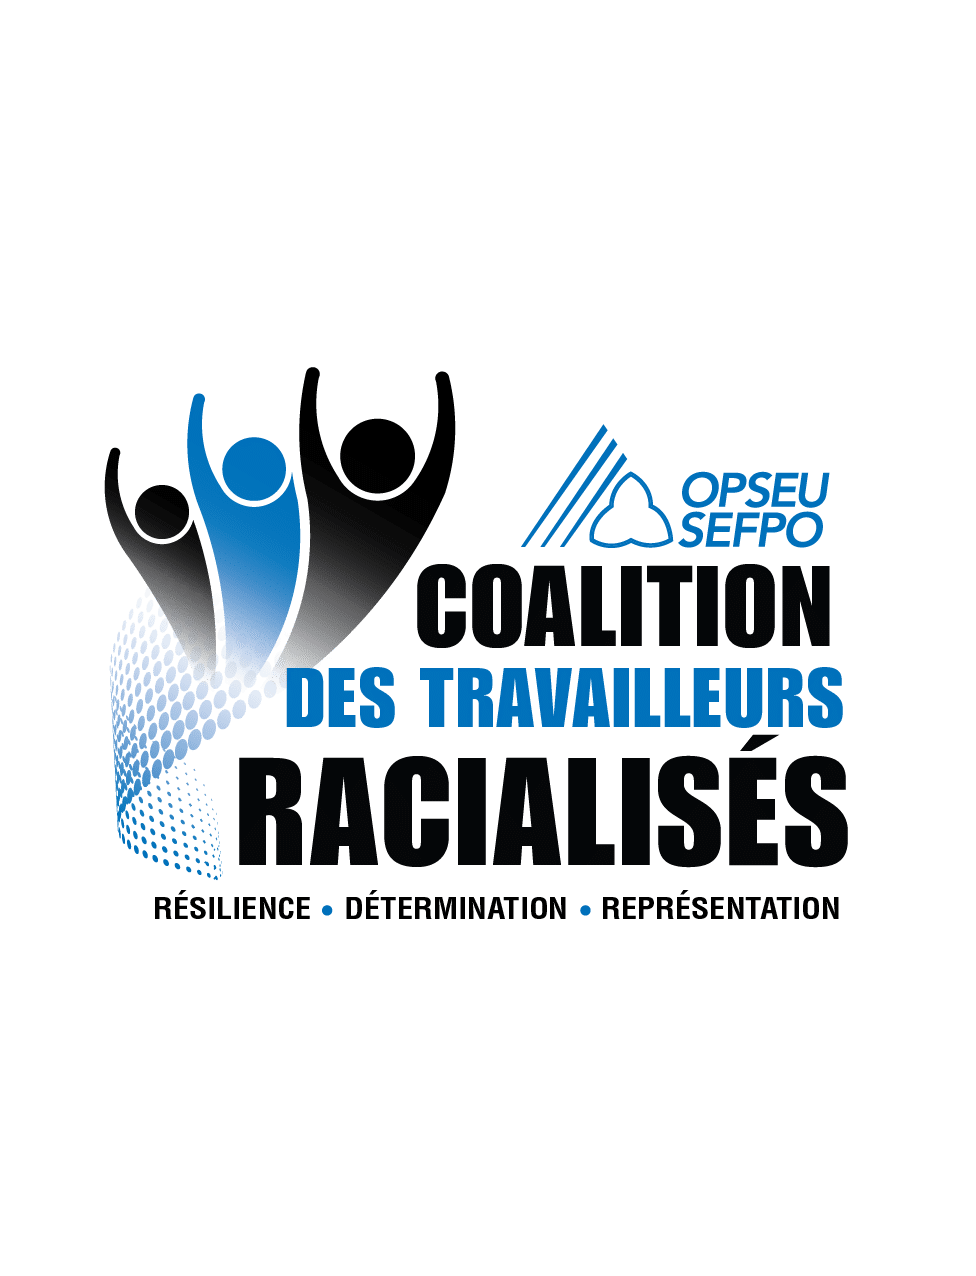 OPSEU Coalition des Travailleurs Racialises. Resilience, determination, representation